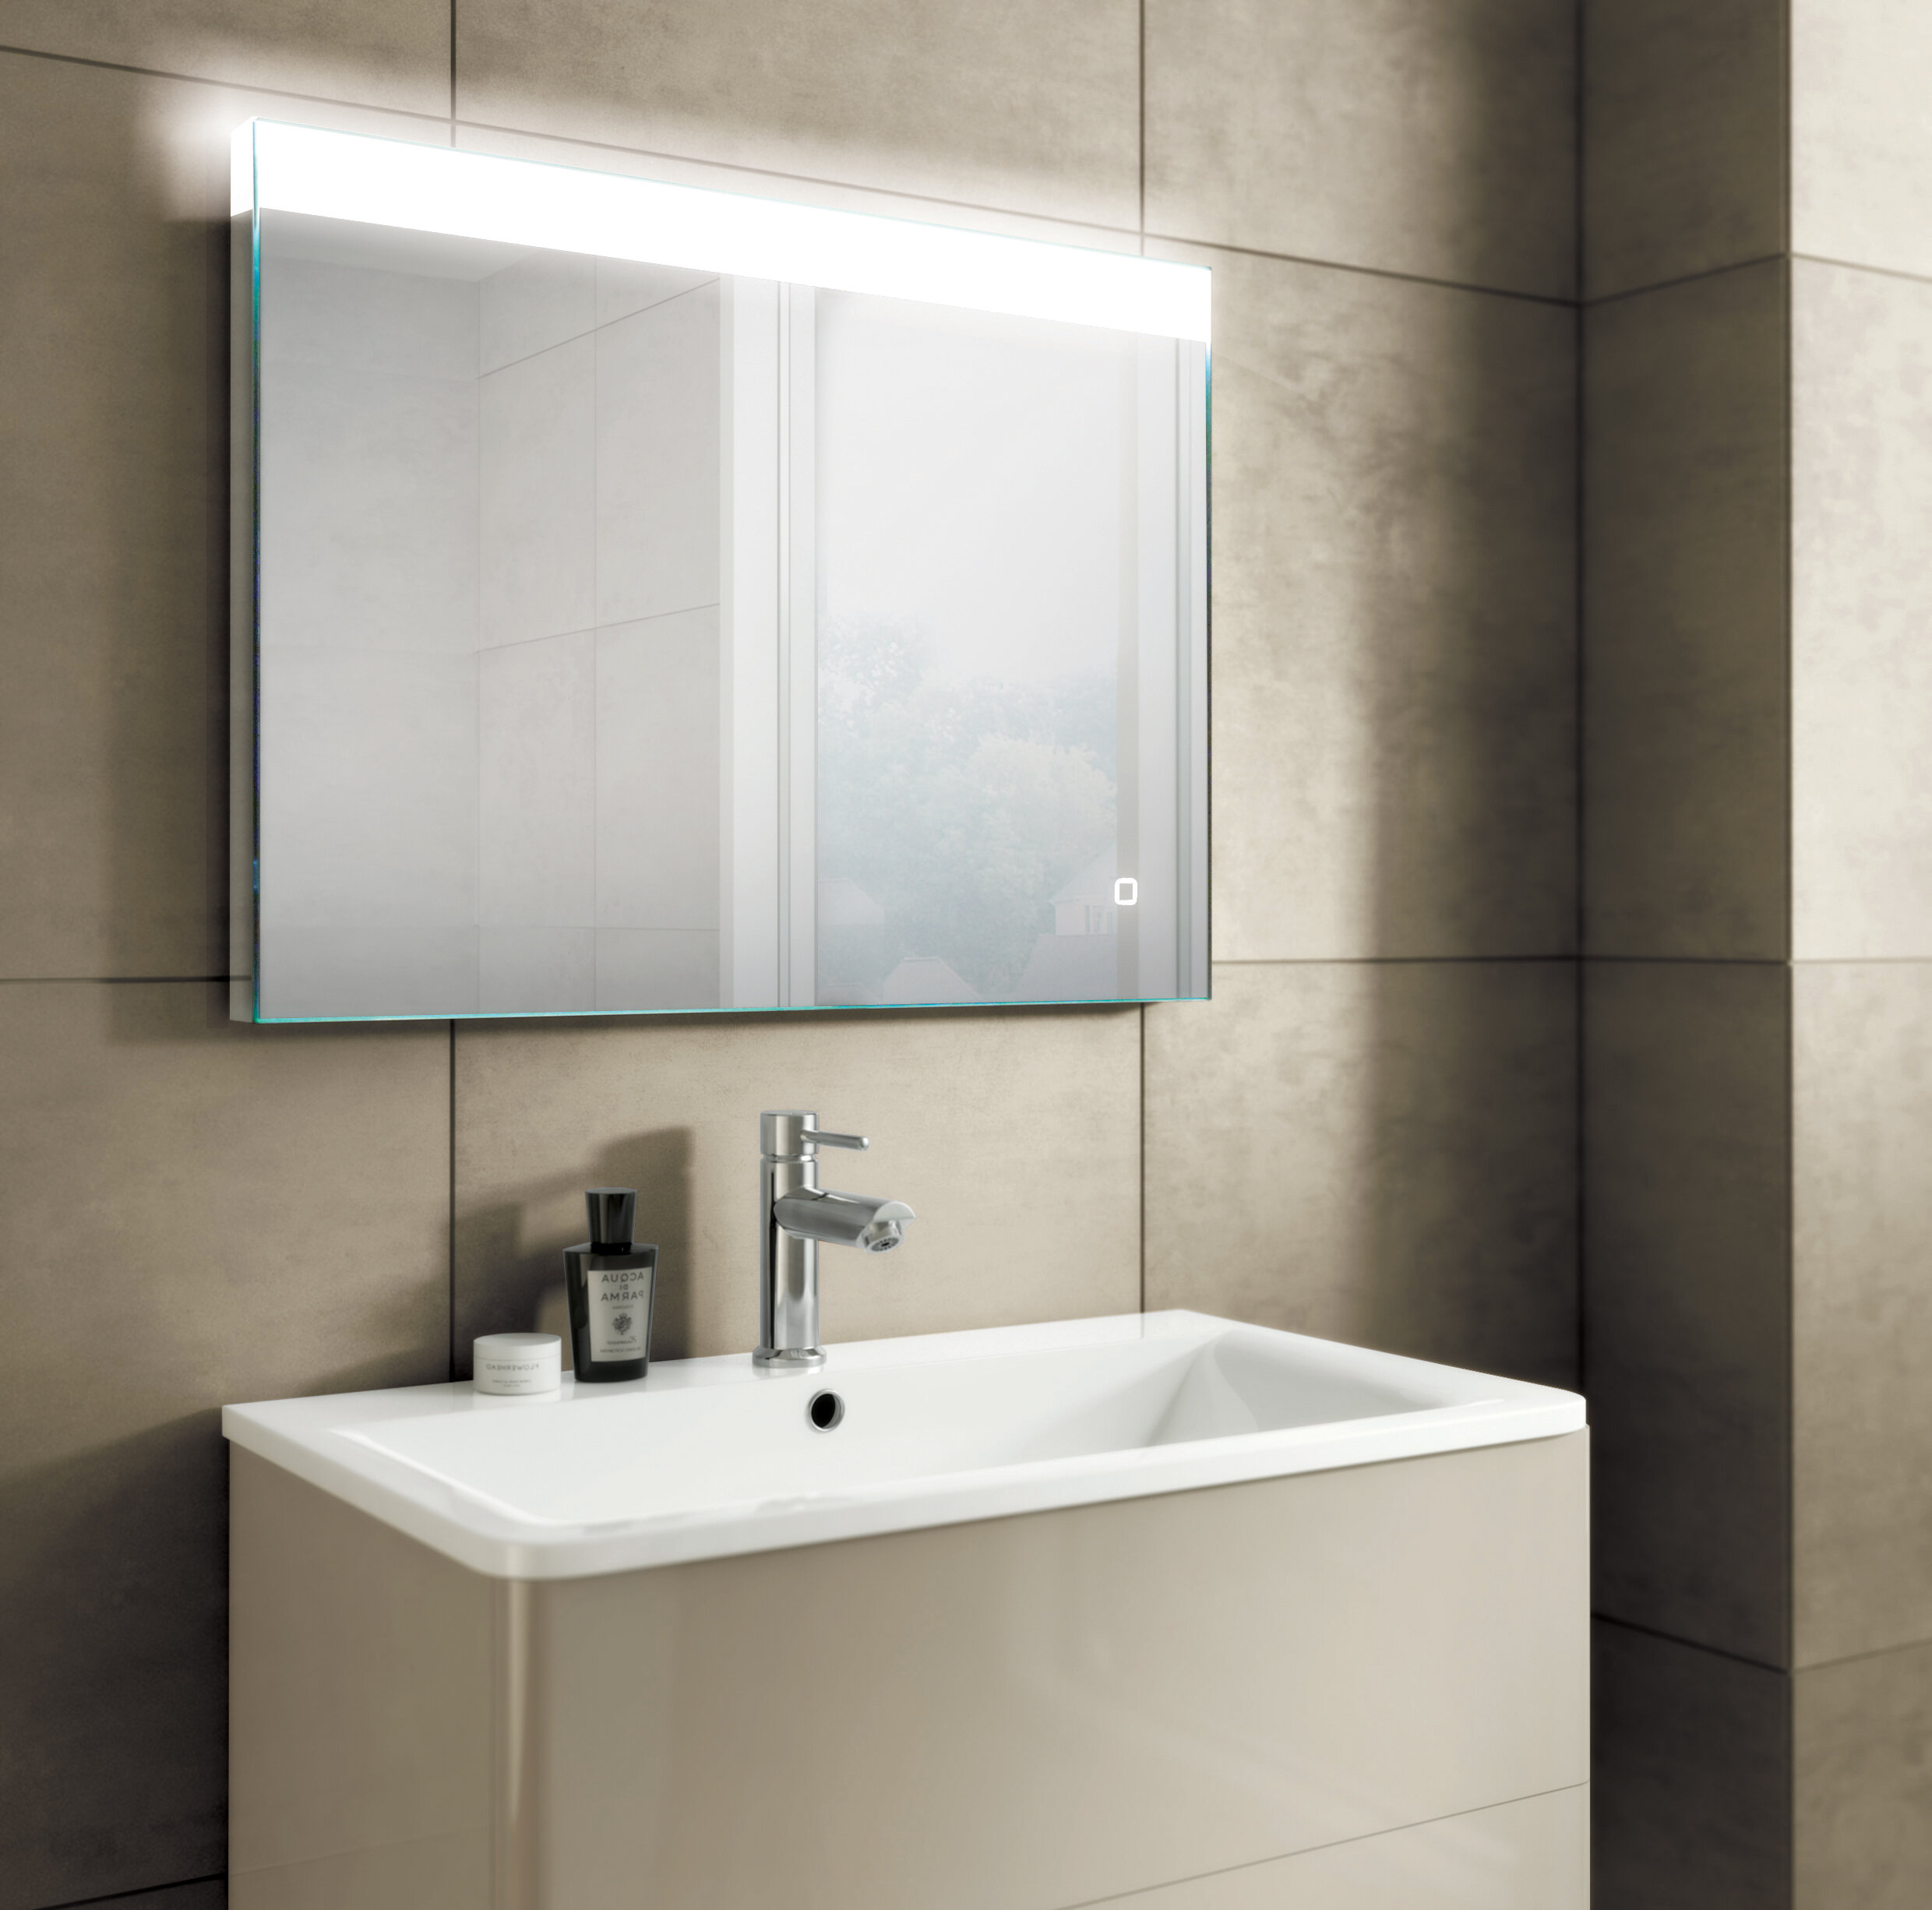 Hib Alpine Bathroom Vanity Mirror Wayfaircouk